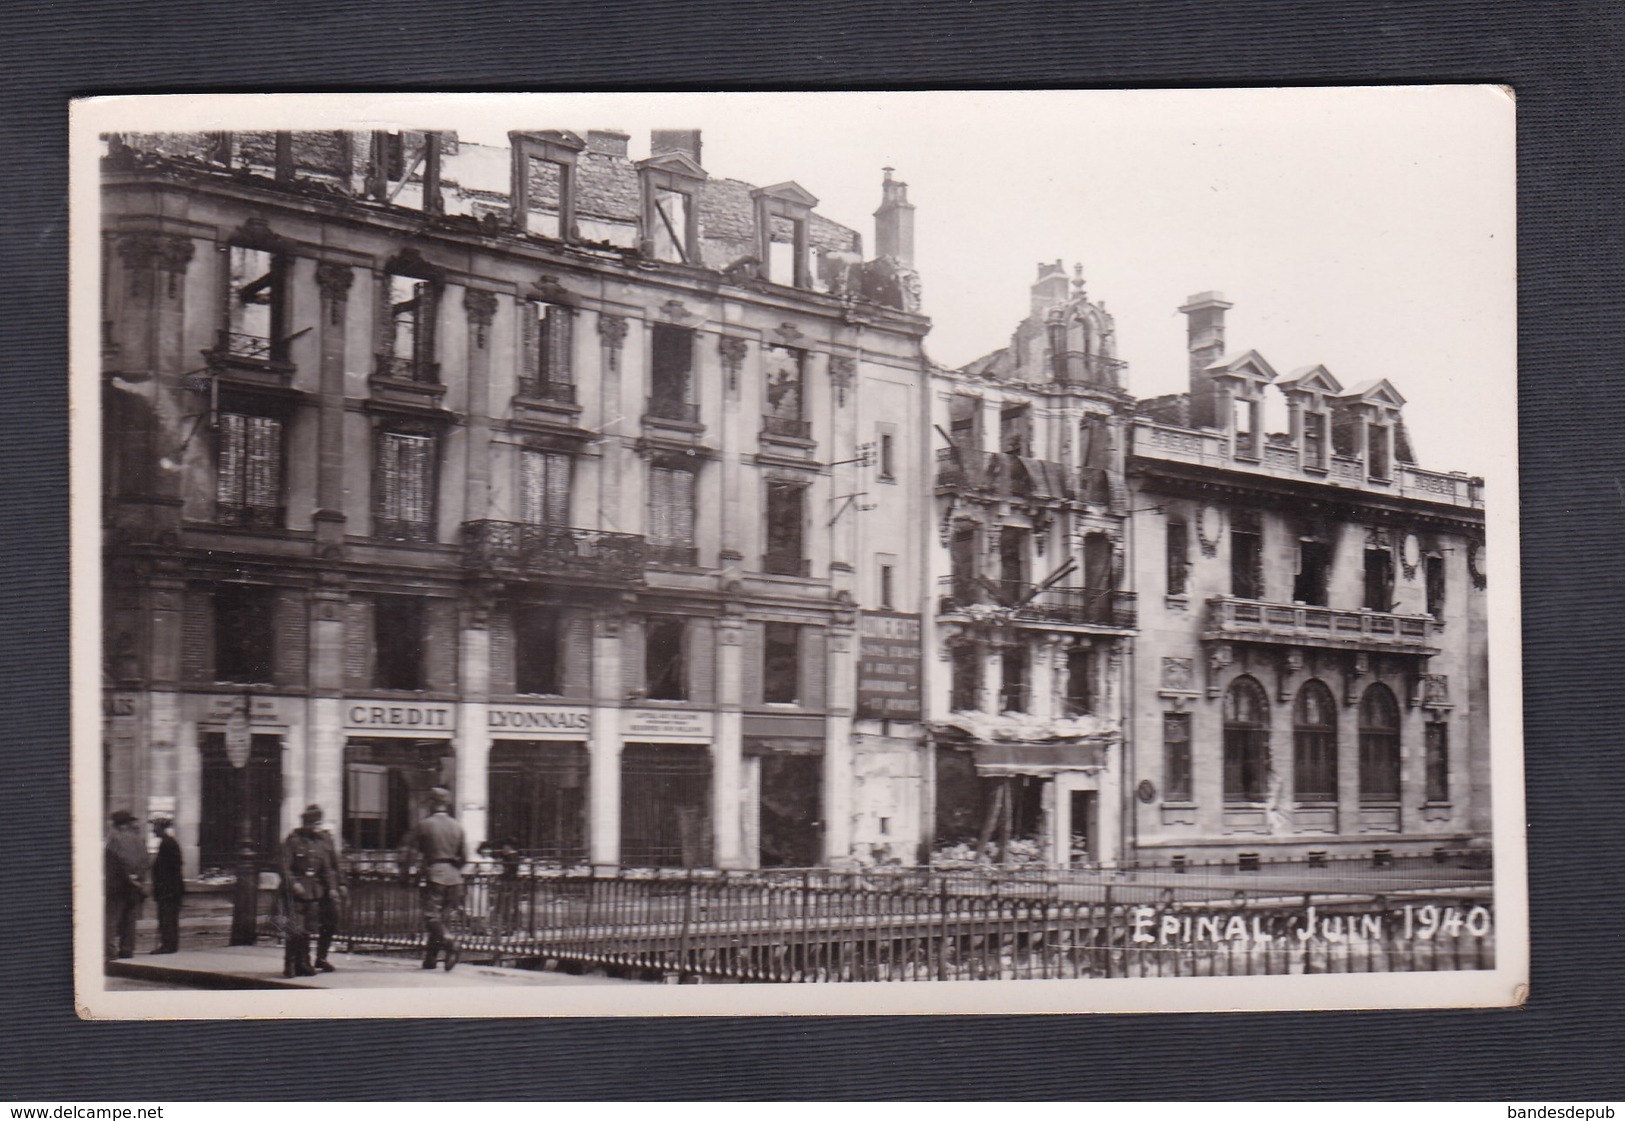 Vente Immediate Epinal Guerre 39-45 Juin 1940 Bombardement Rue Jules Ferry Banque Credit Lyonnais - Epinal